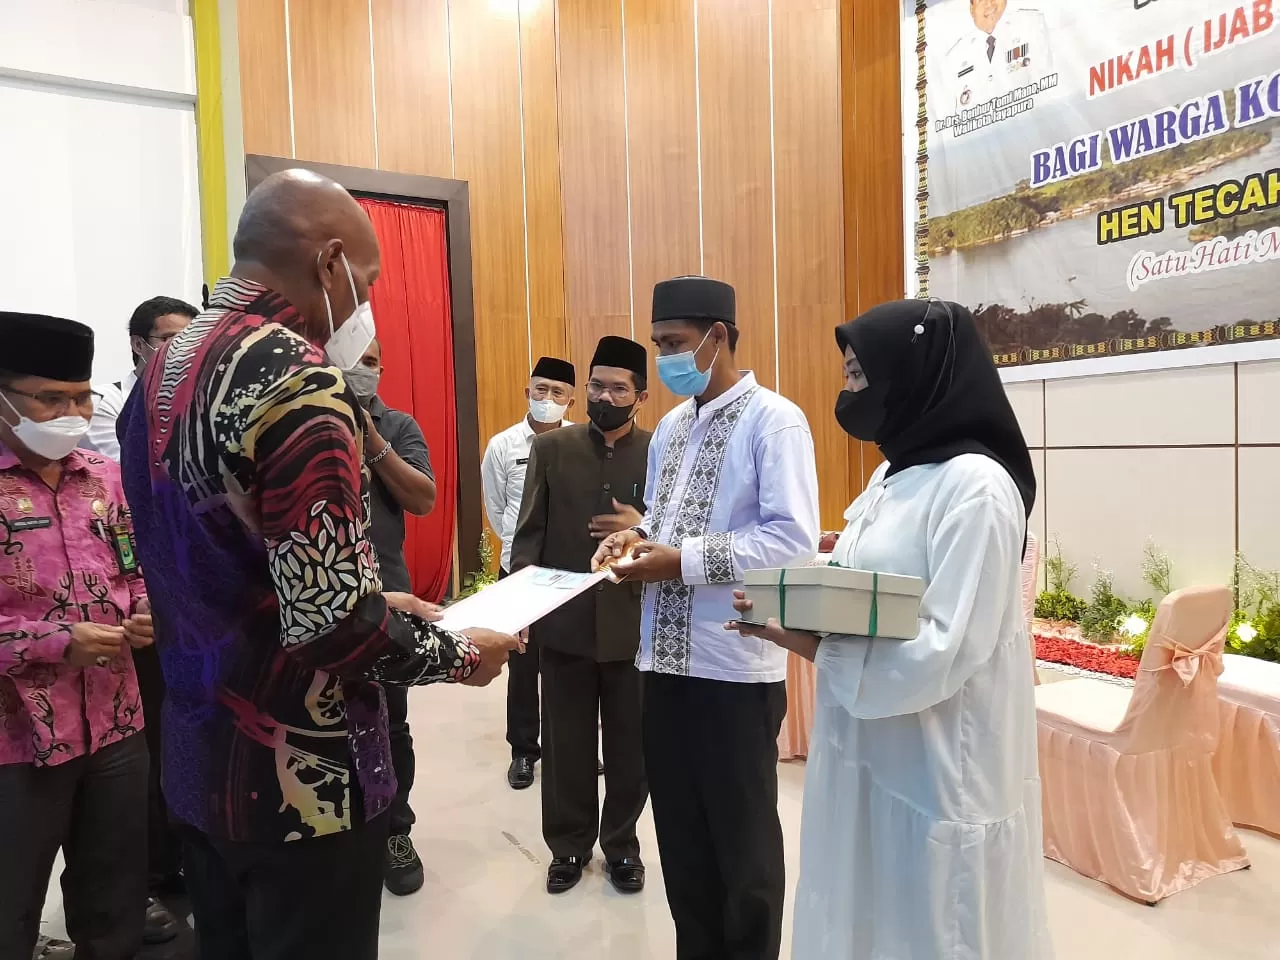 Wali Kota Jayapura Dr Benhur Tomi Mano, MM menyerahkan menyerahkan akta nikah bagi salah satu pasangan nikah massal di Aula Sian Soor Kantor Wali Kota Jayapura, Rabu (23/2). (Ayu/Cepos)